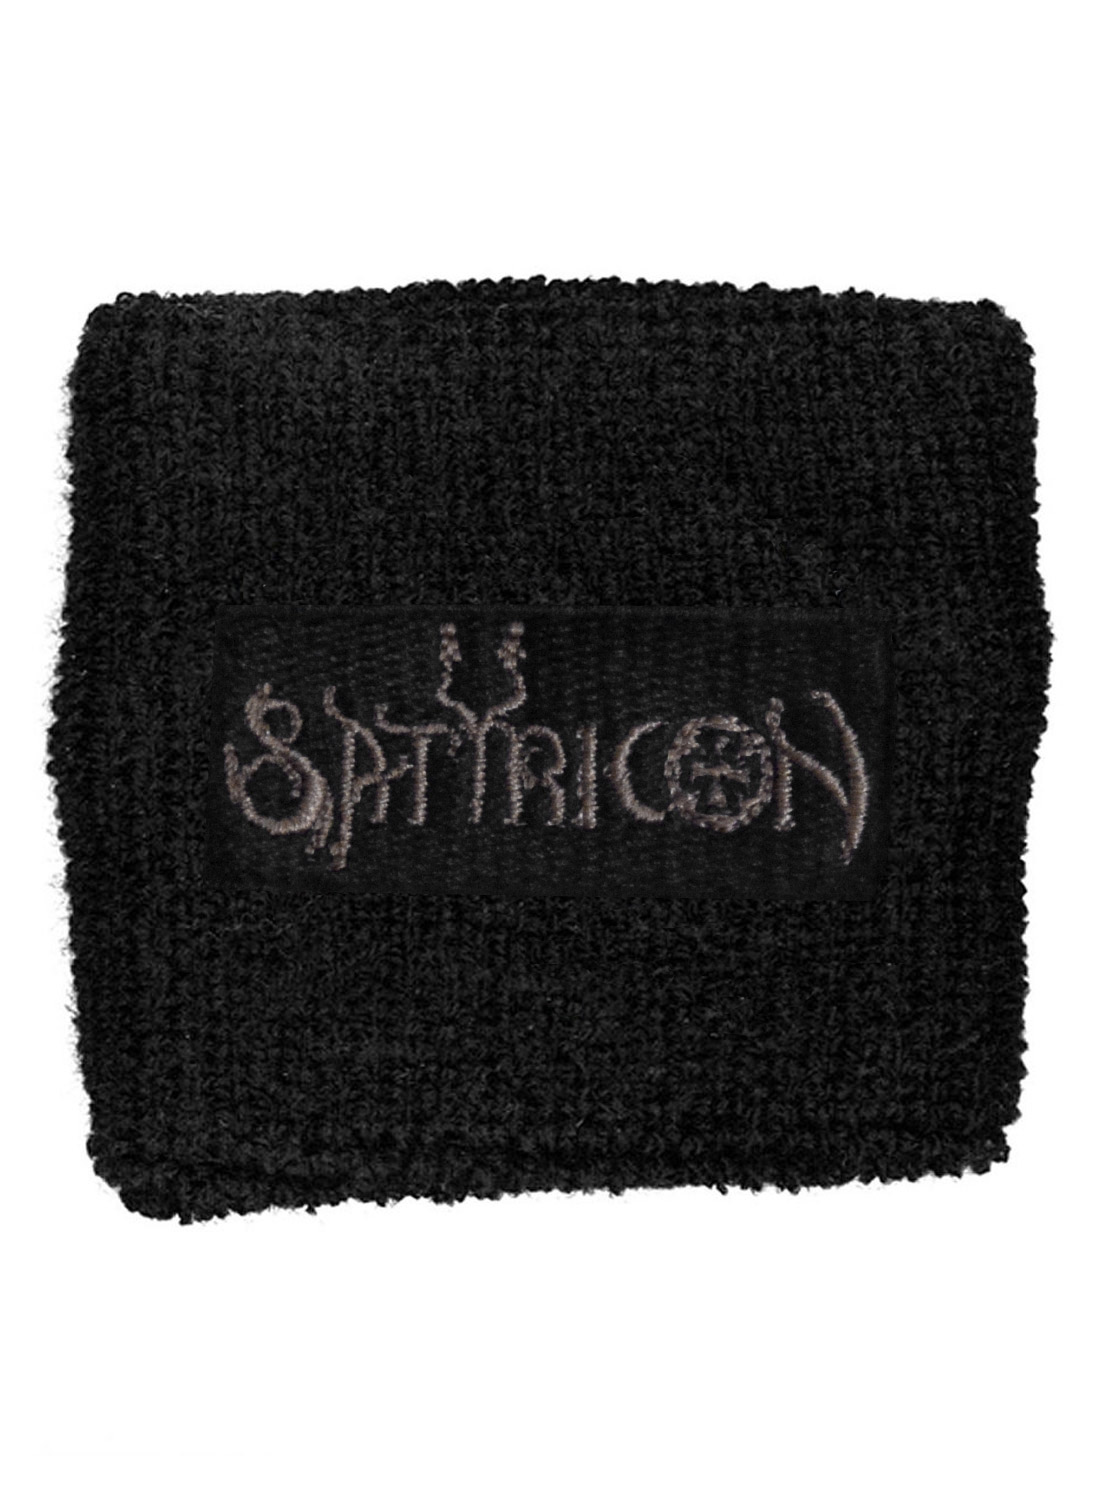 Satyticon Embroidered Sweatband